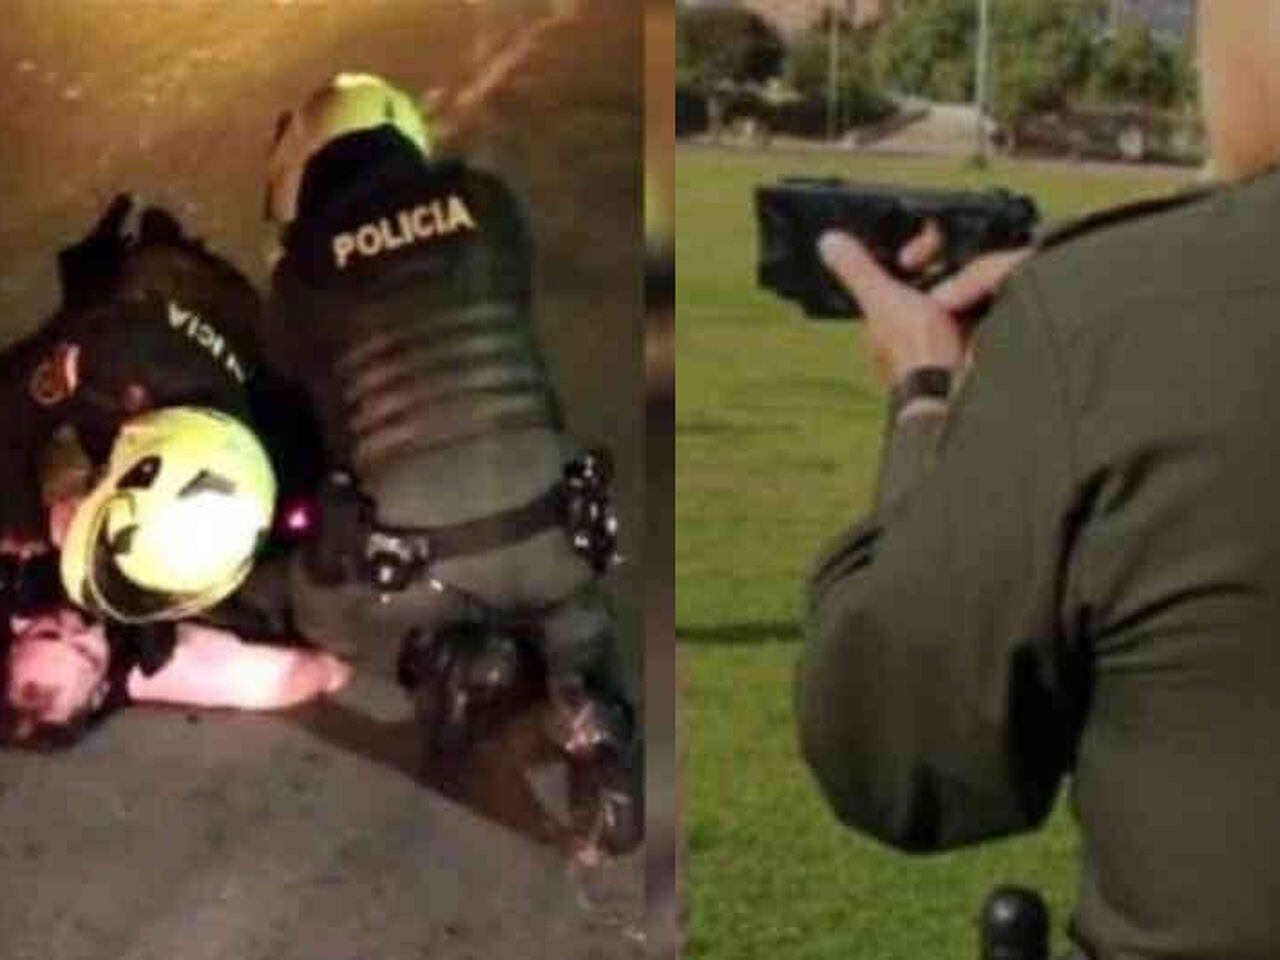 Taser Pistola / Taser a distancia – Proteccion Total